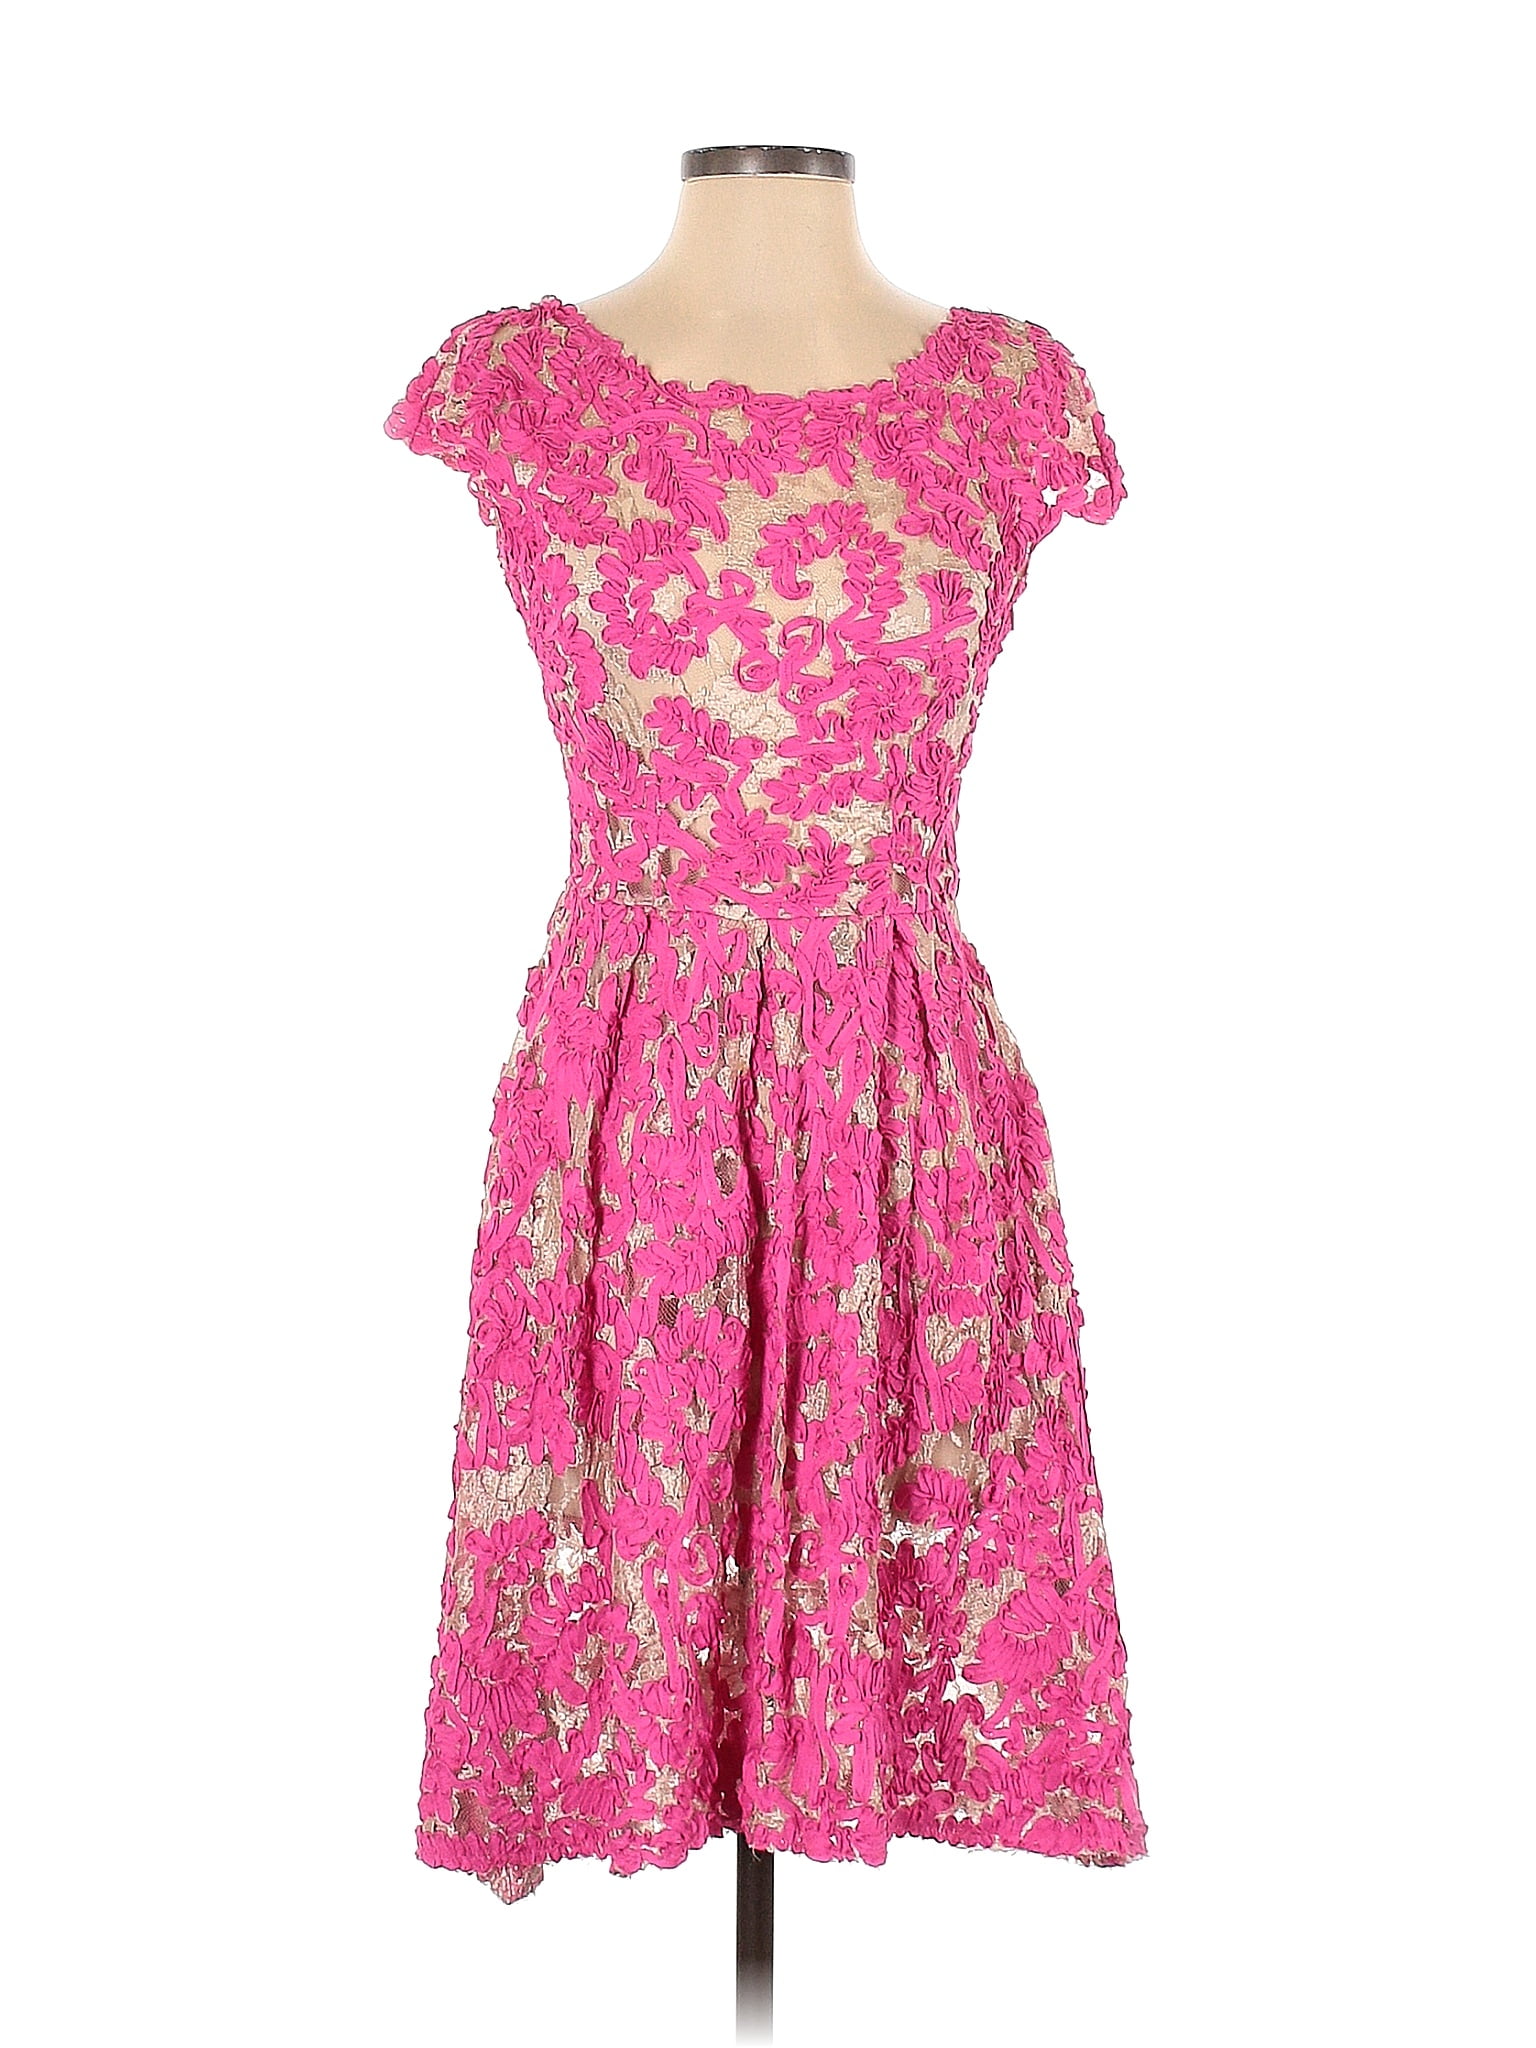 Yoana Baraschi 100% Nylon Floral Pink Cocktail Dress Size 4 (Petite ...